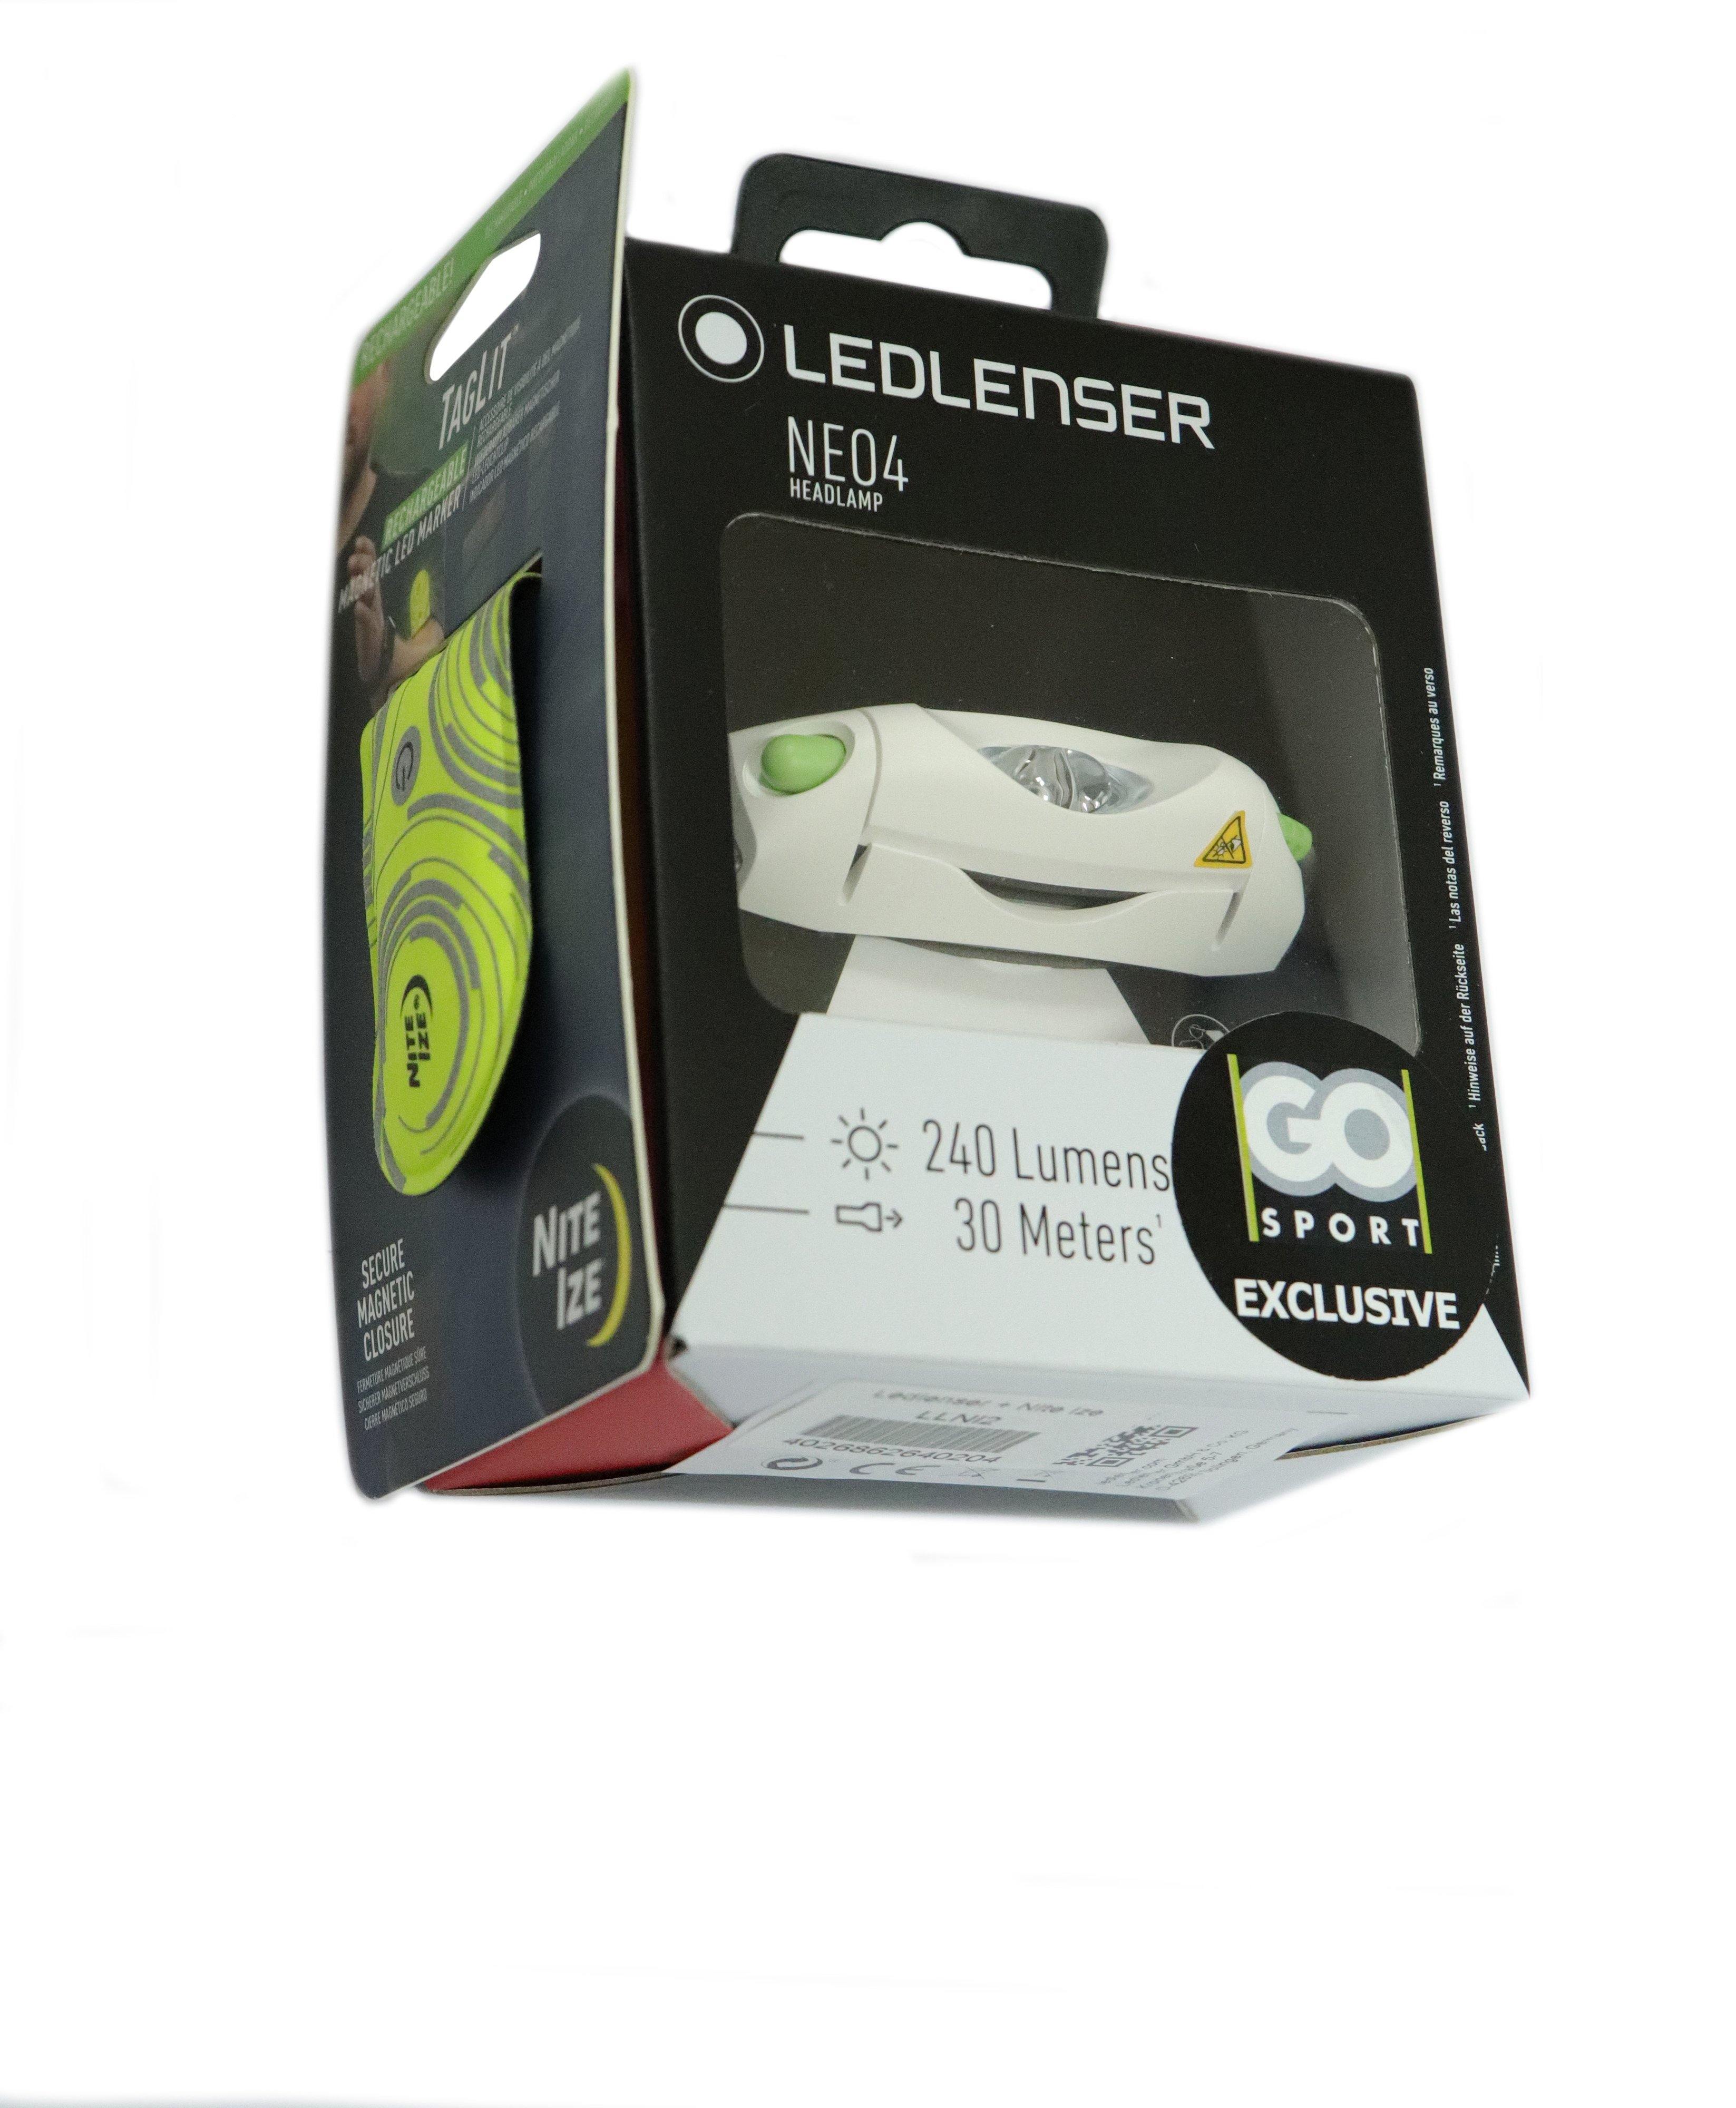 Ledlenser NEO4 Green Headlight NiteIze Taglit Runners Safety Light - Gosportcom